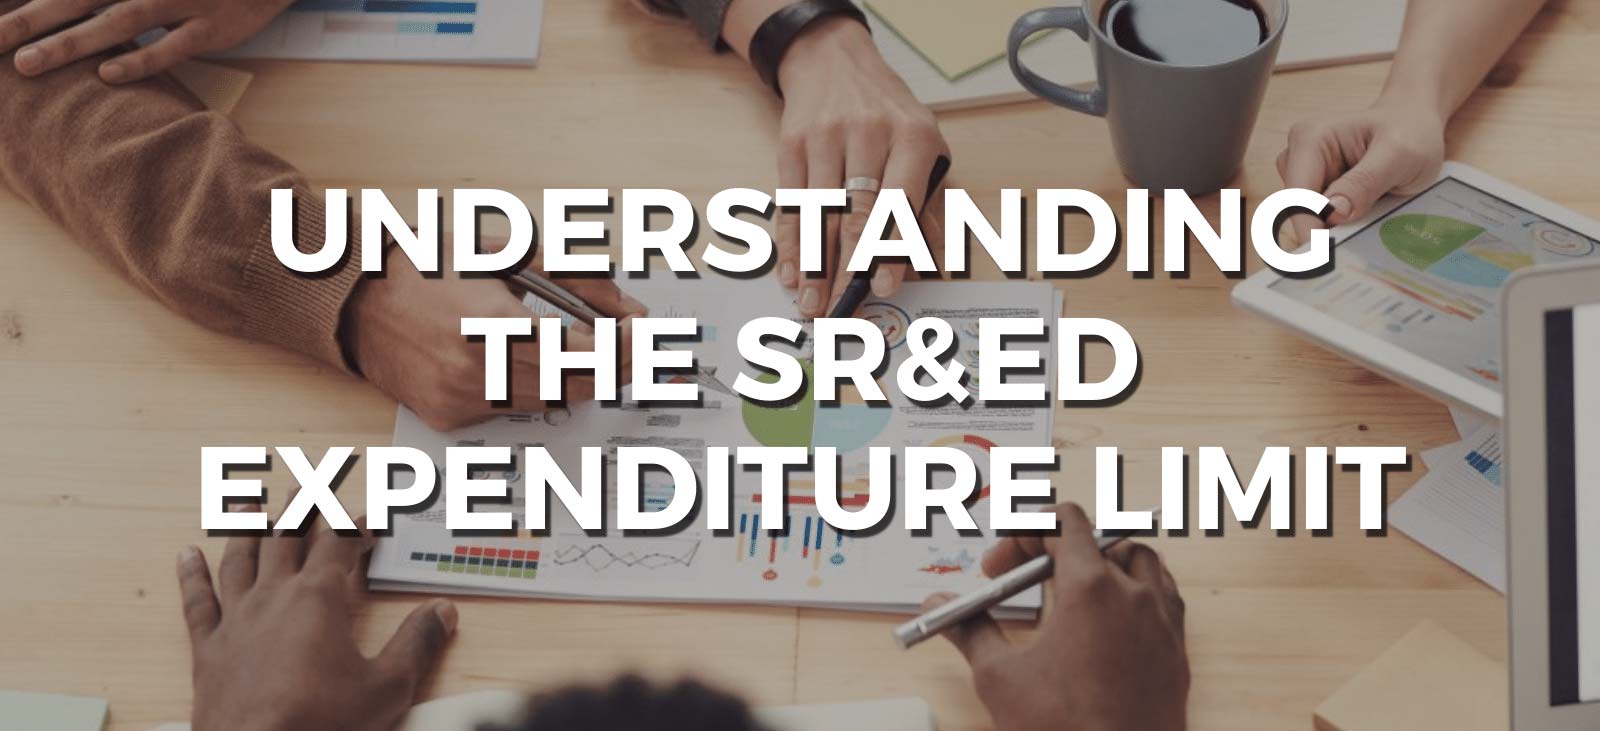 understanding the sred expenditure limit